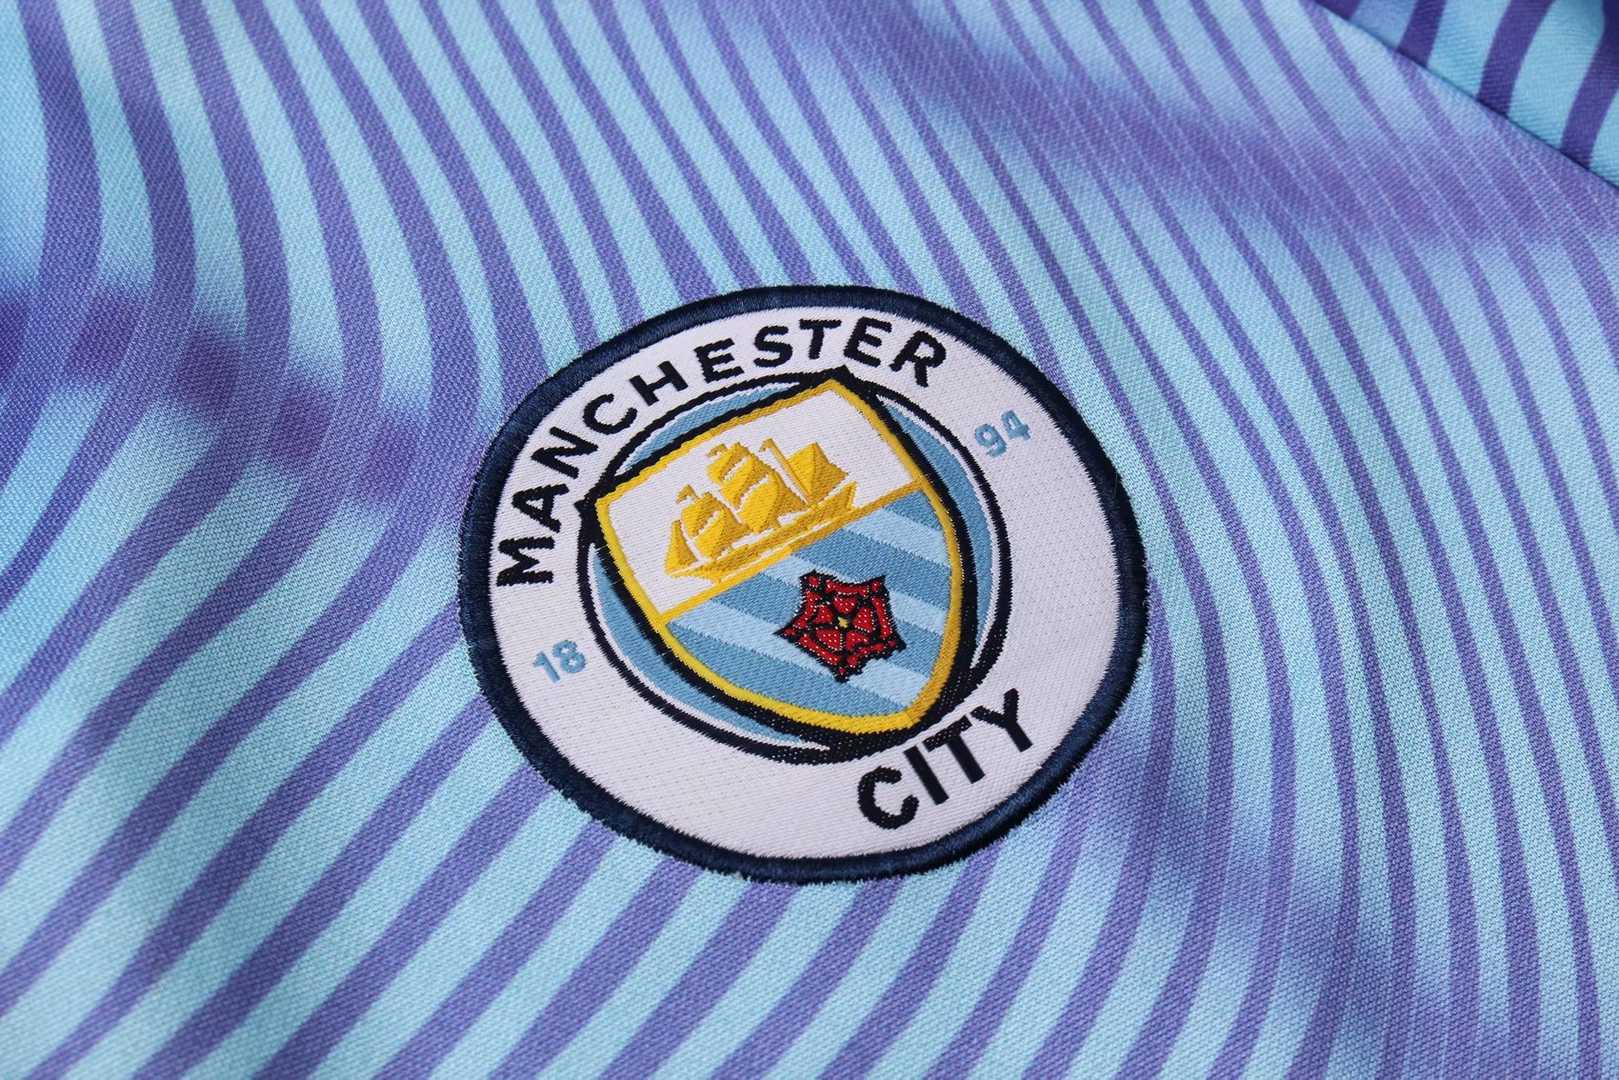 2019/20 Manchester City Violet Mens Soccer Training Suit(Jacket + Pants)